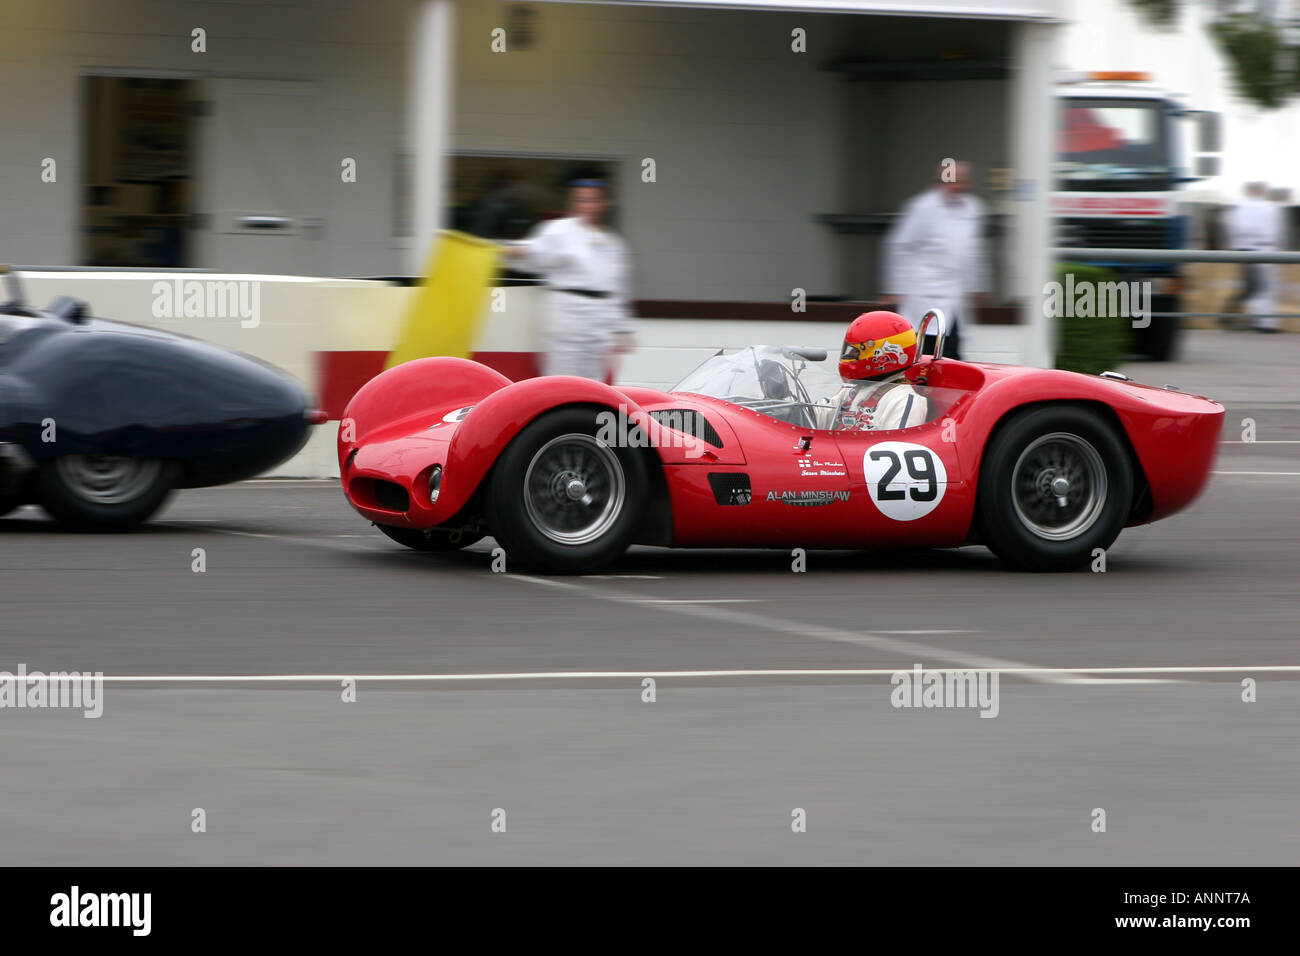 Red vintage racing car Foto Stock